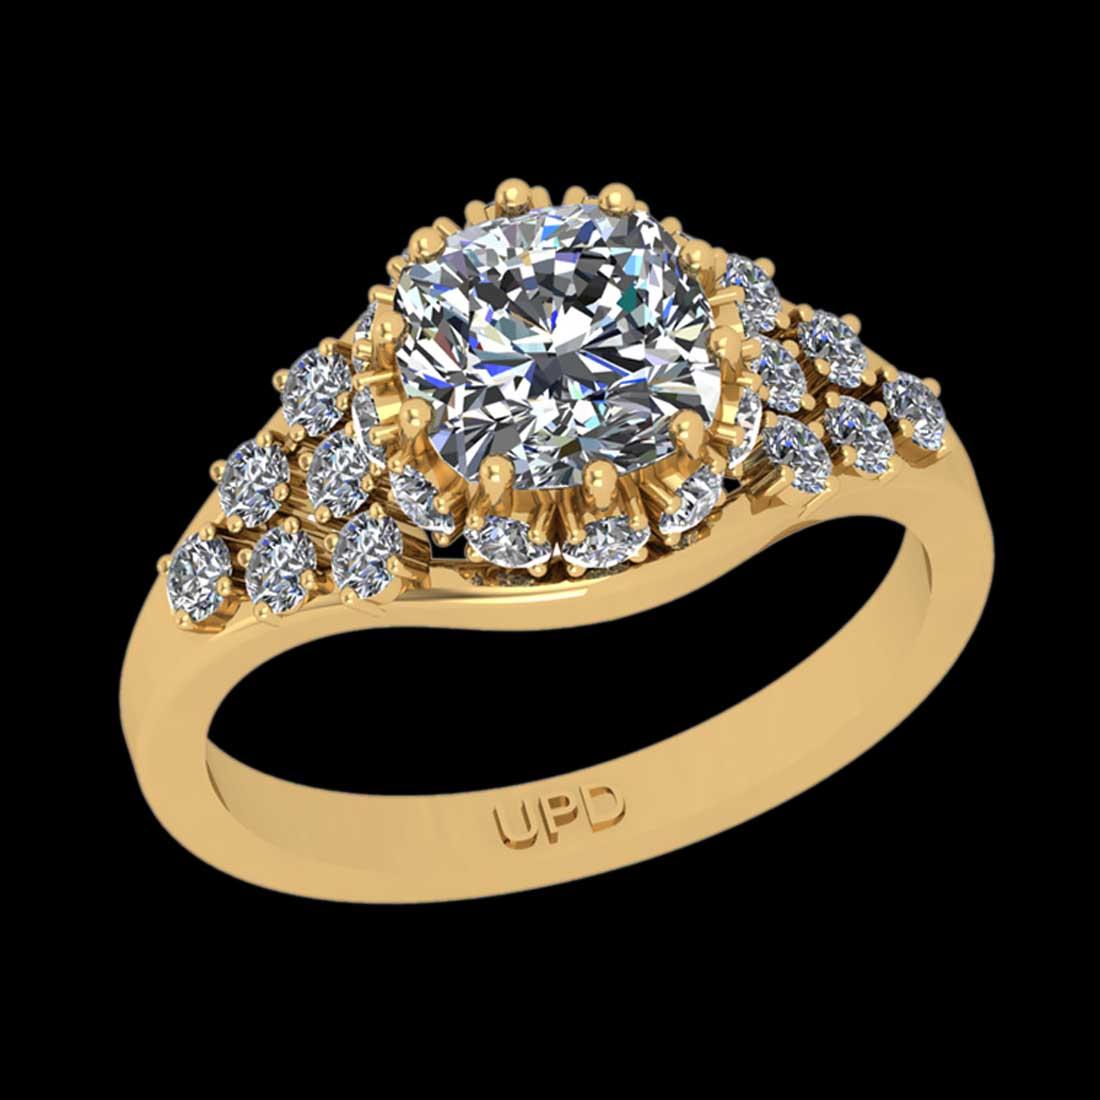 1.89 Ctw VS/SI1 Diamond 14K Yellow Gold Engagement Halo Ring